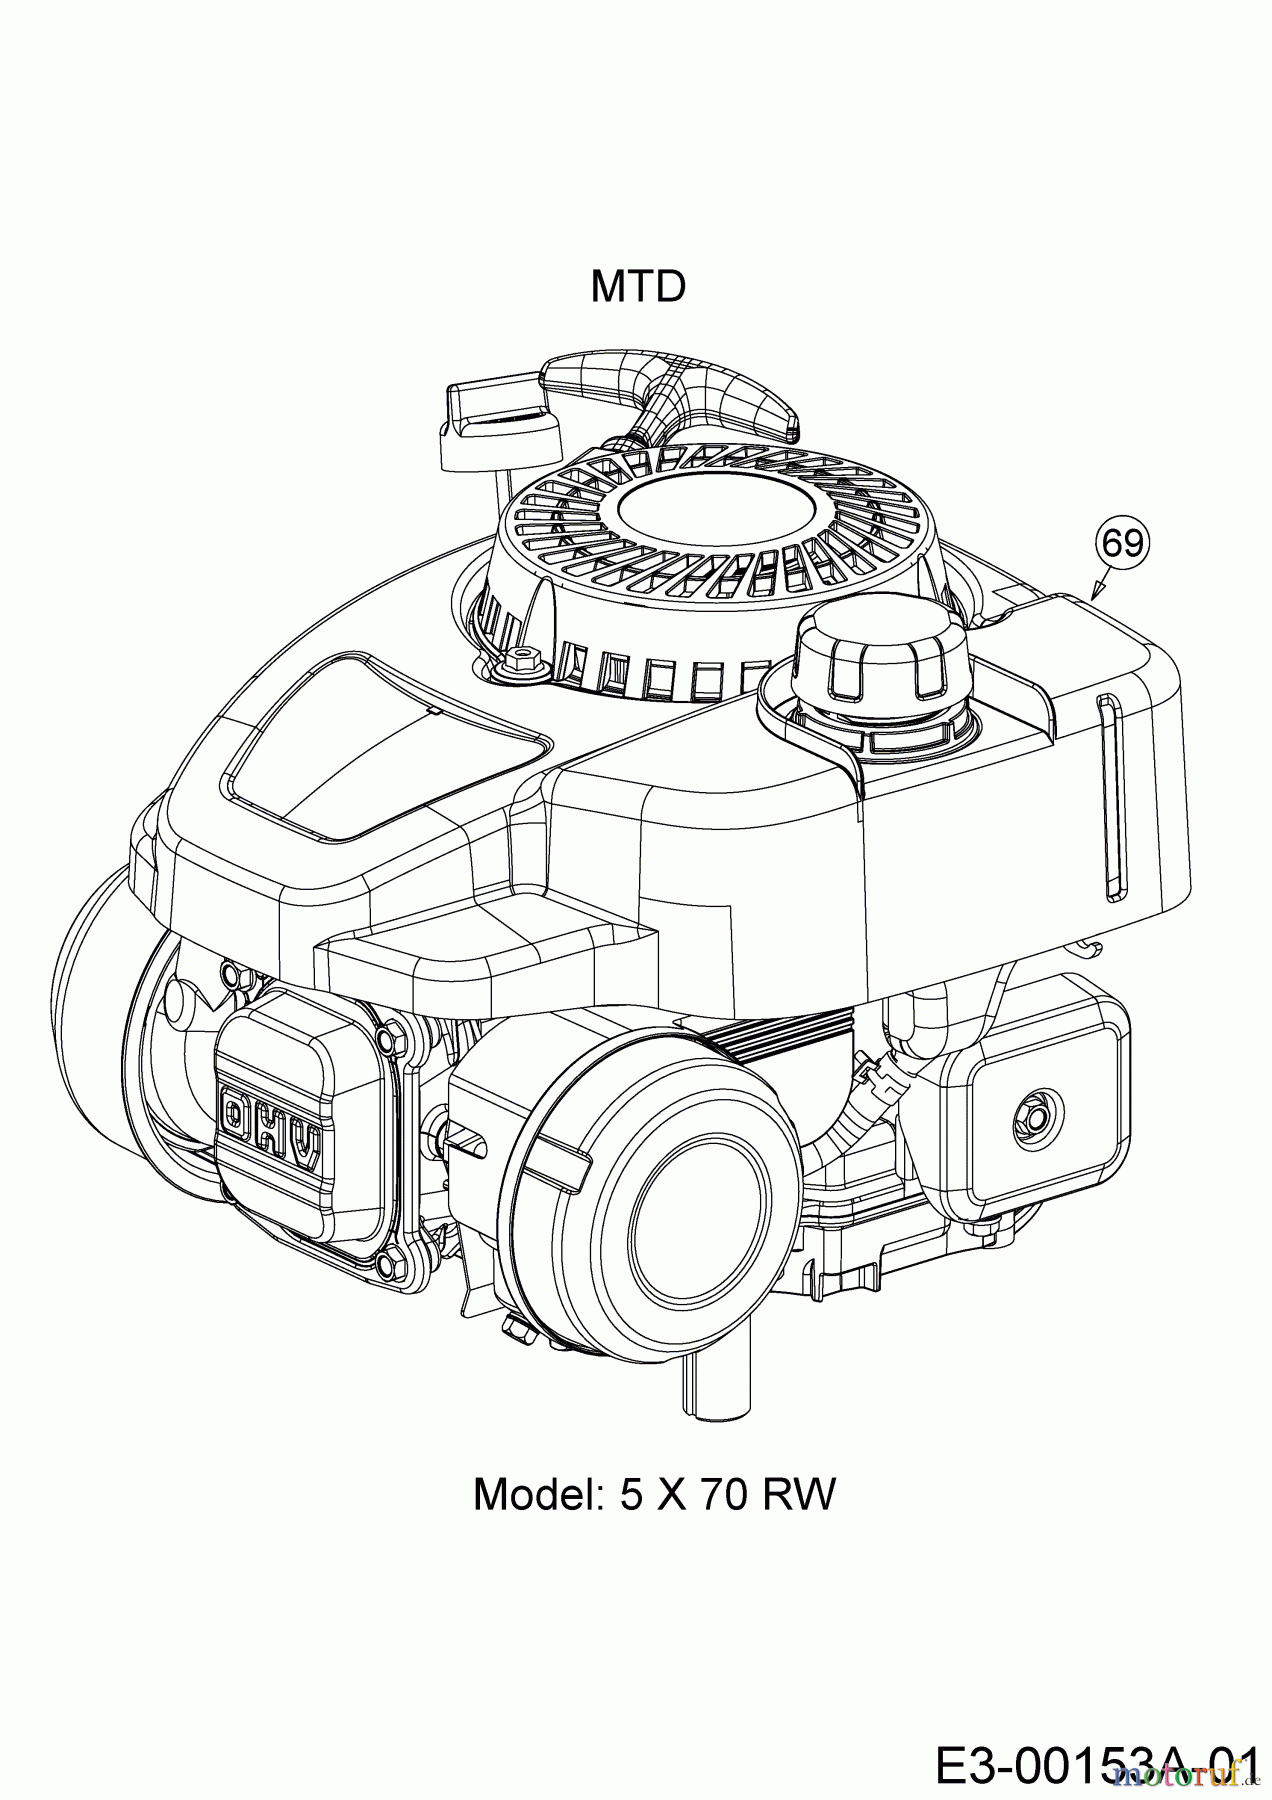  Cub Cadet Petrol mower self propelled LM3 ER53 12AQC6J4603   (2019) Engine MTD